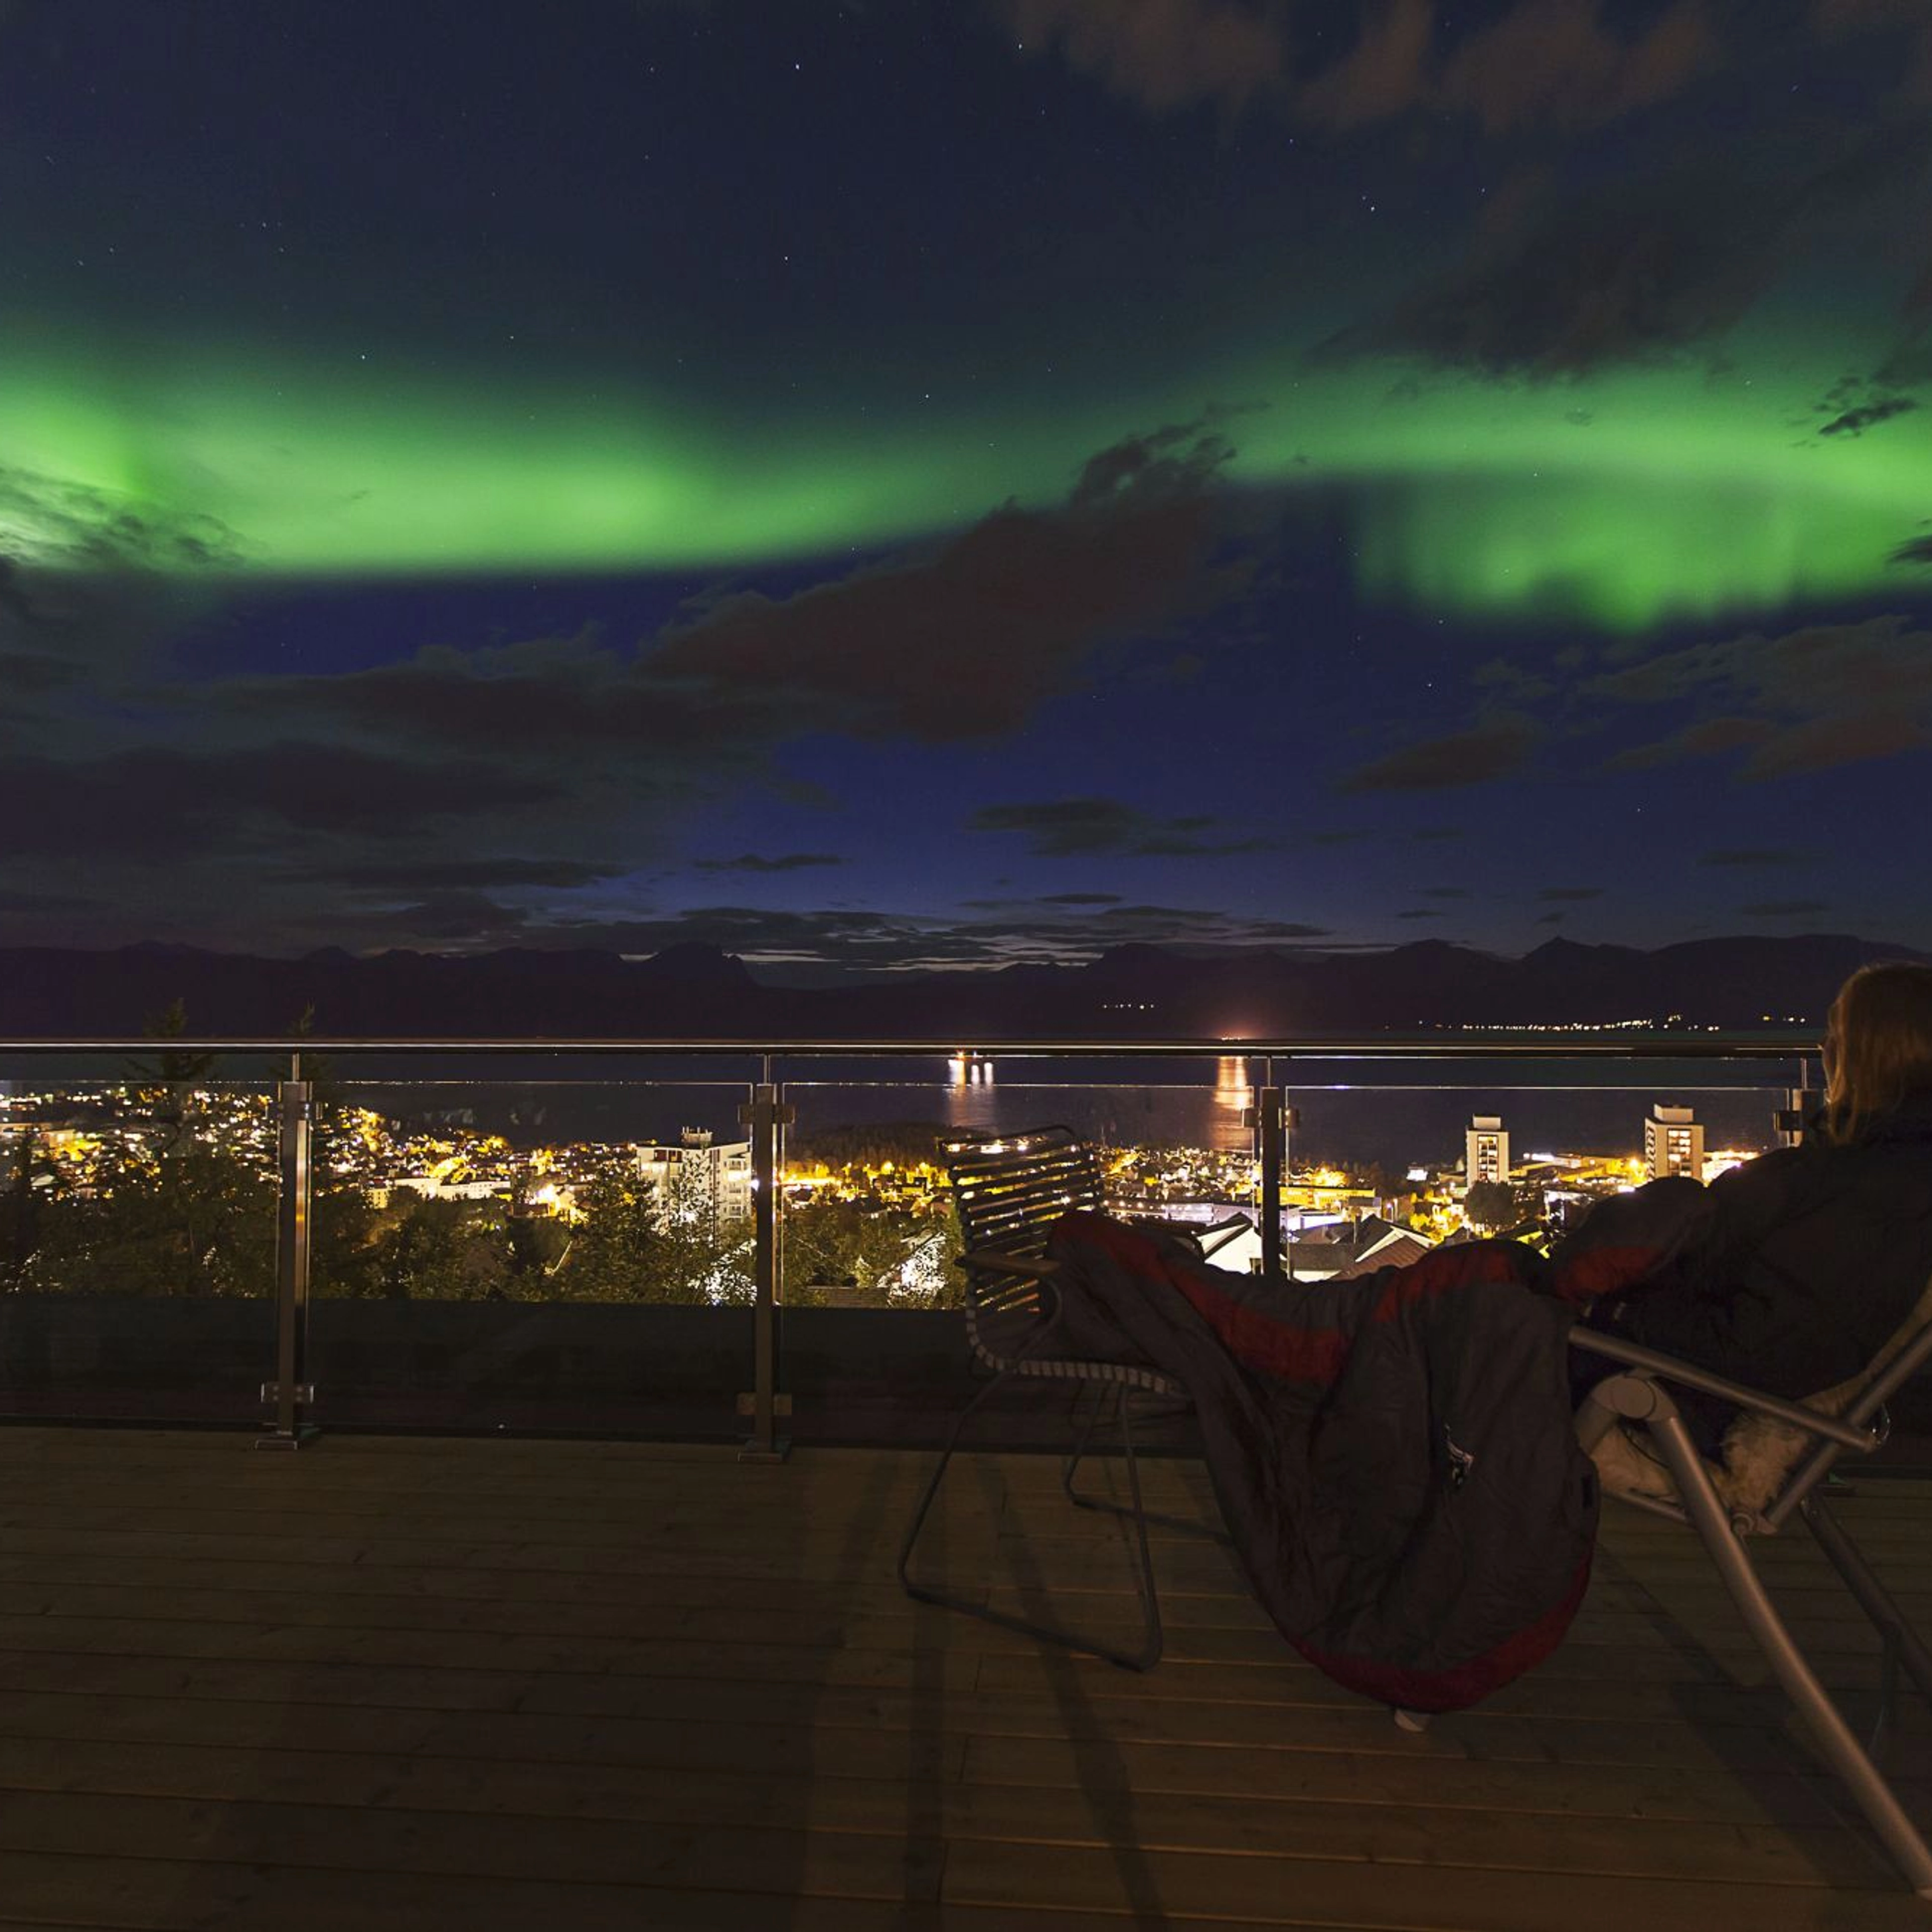 Northern lights in Narvik - Norway